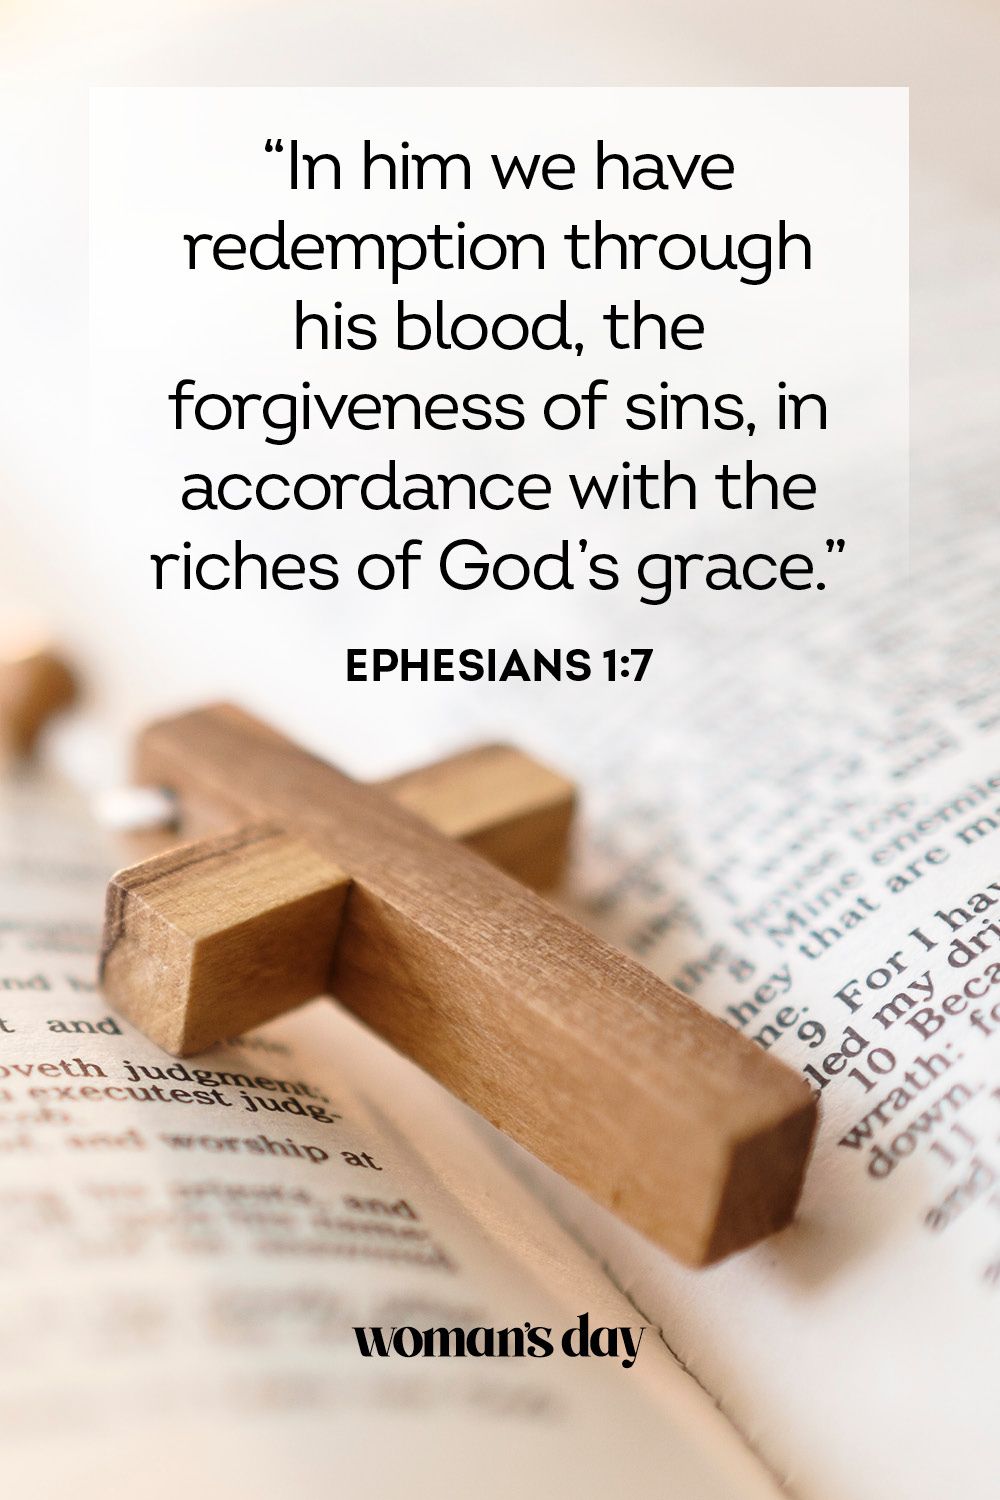 Healing and Forgiveness (Mark 2:9-10)